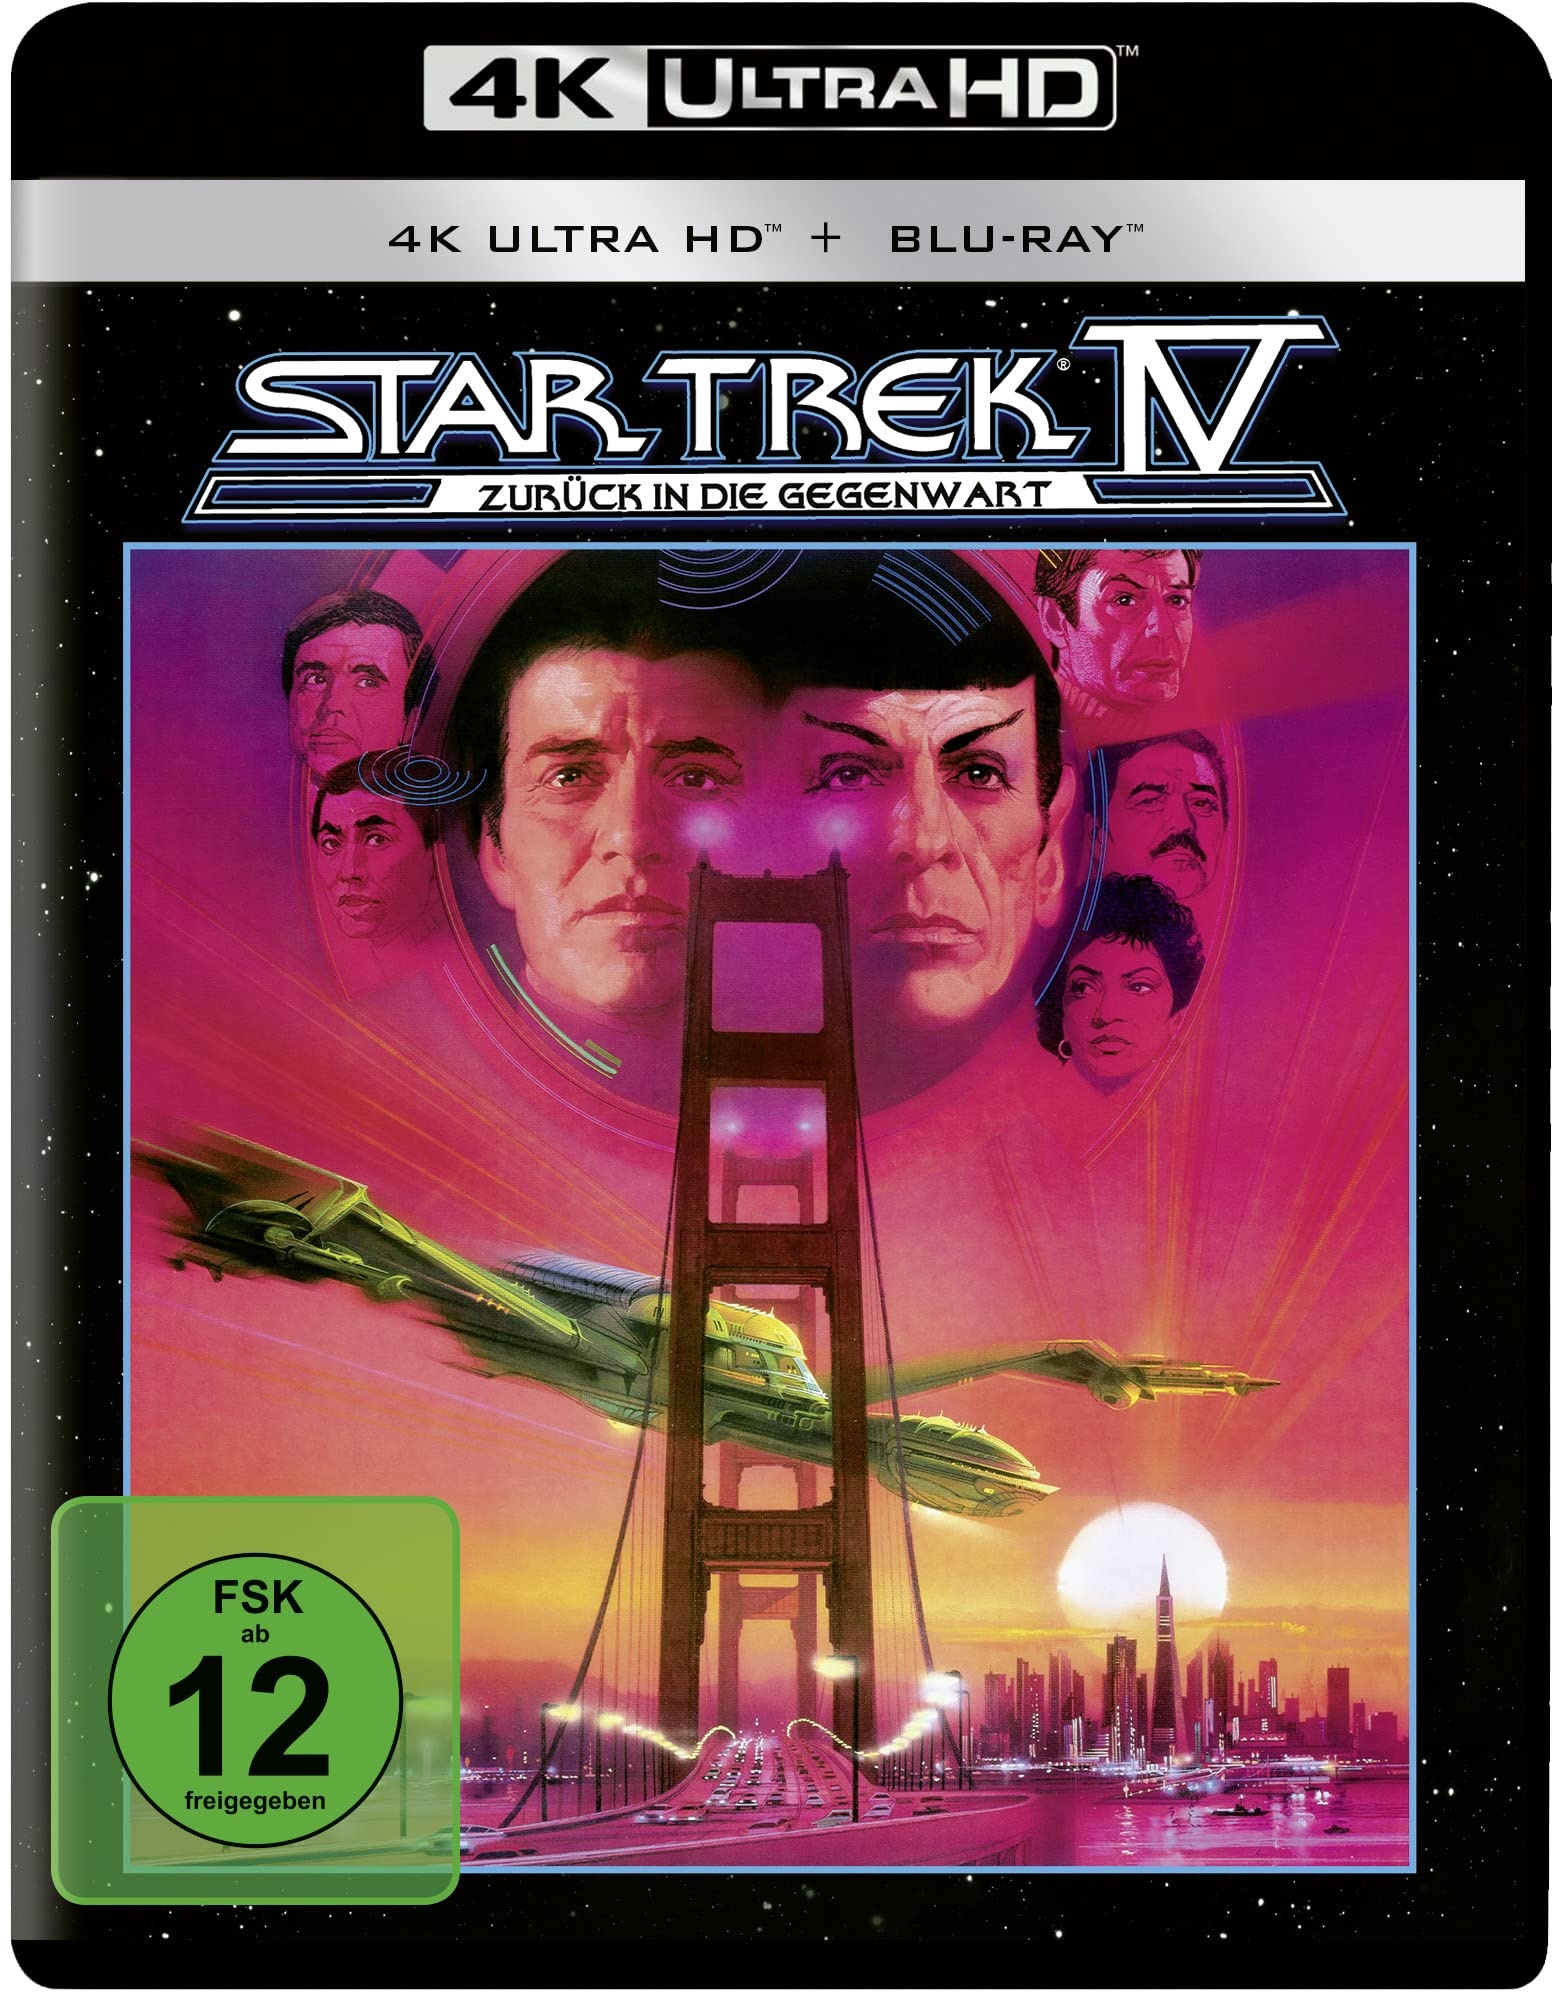 Star Trek IV - Zurück in die Gegenwart - 4K Ultra HD Blu-ray + Blu-ray (4K Ultra HD) (Neu differenzbesteuert)